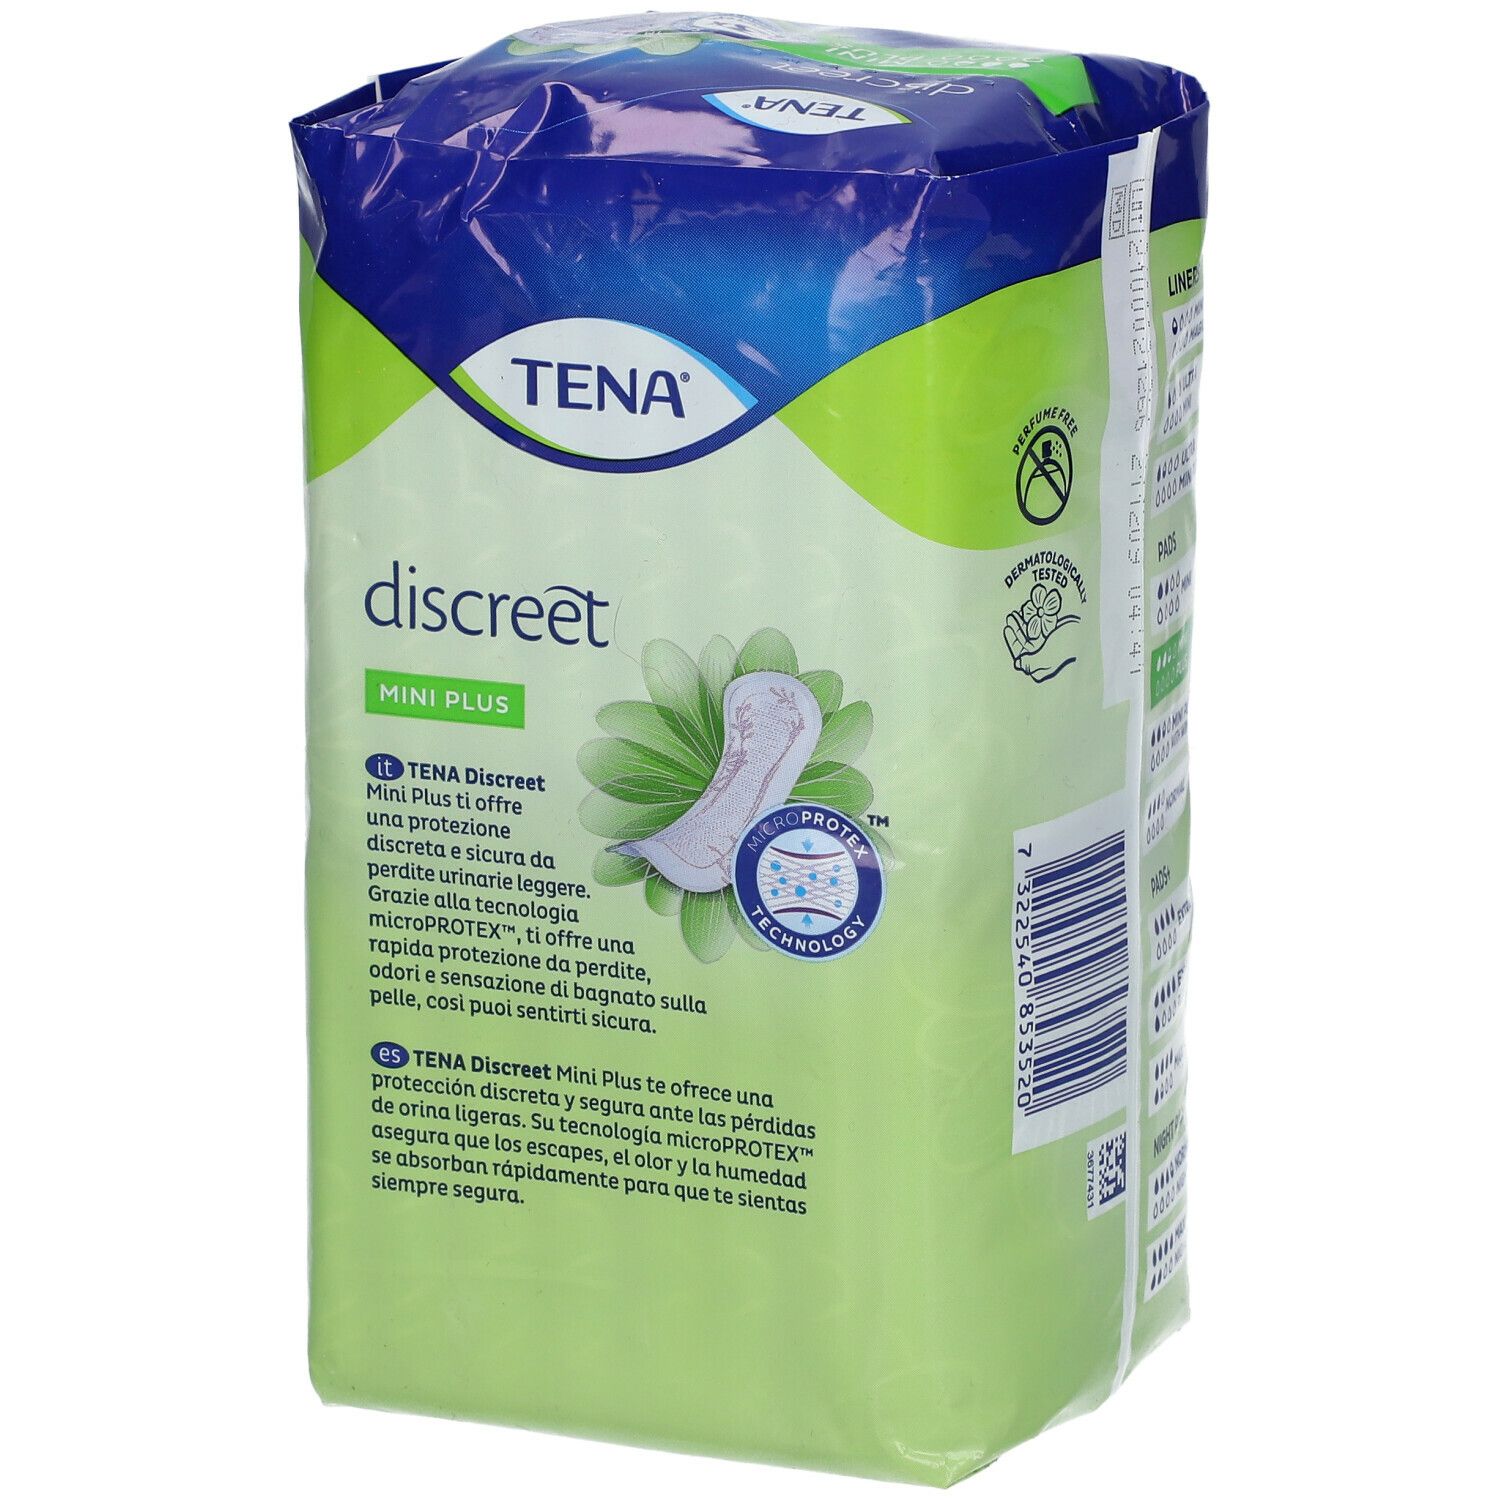 TENA® Lady Discreet Mini Plus